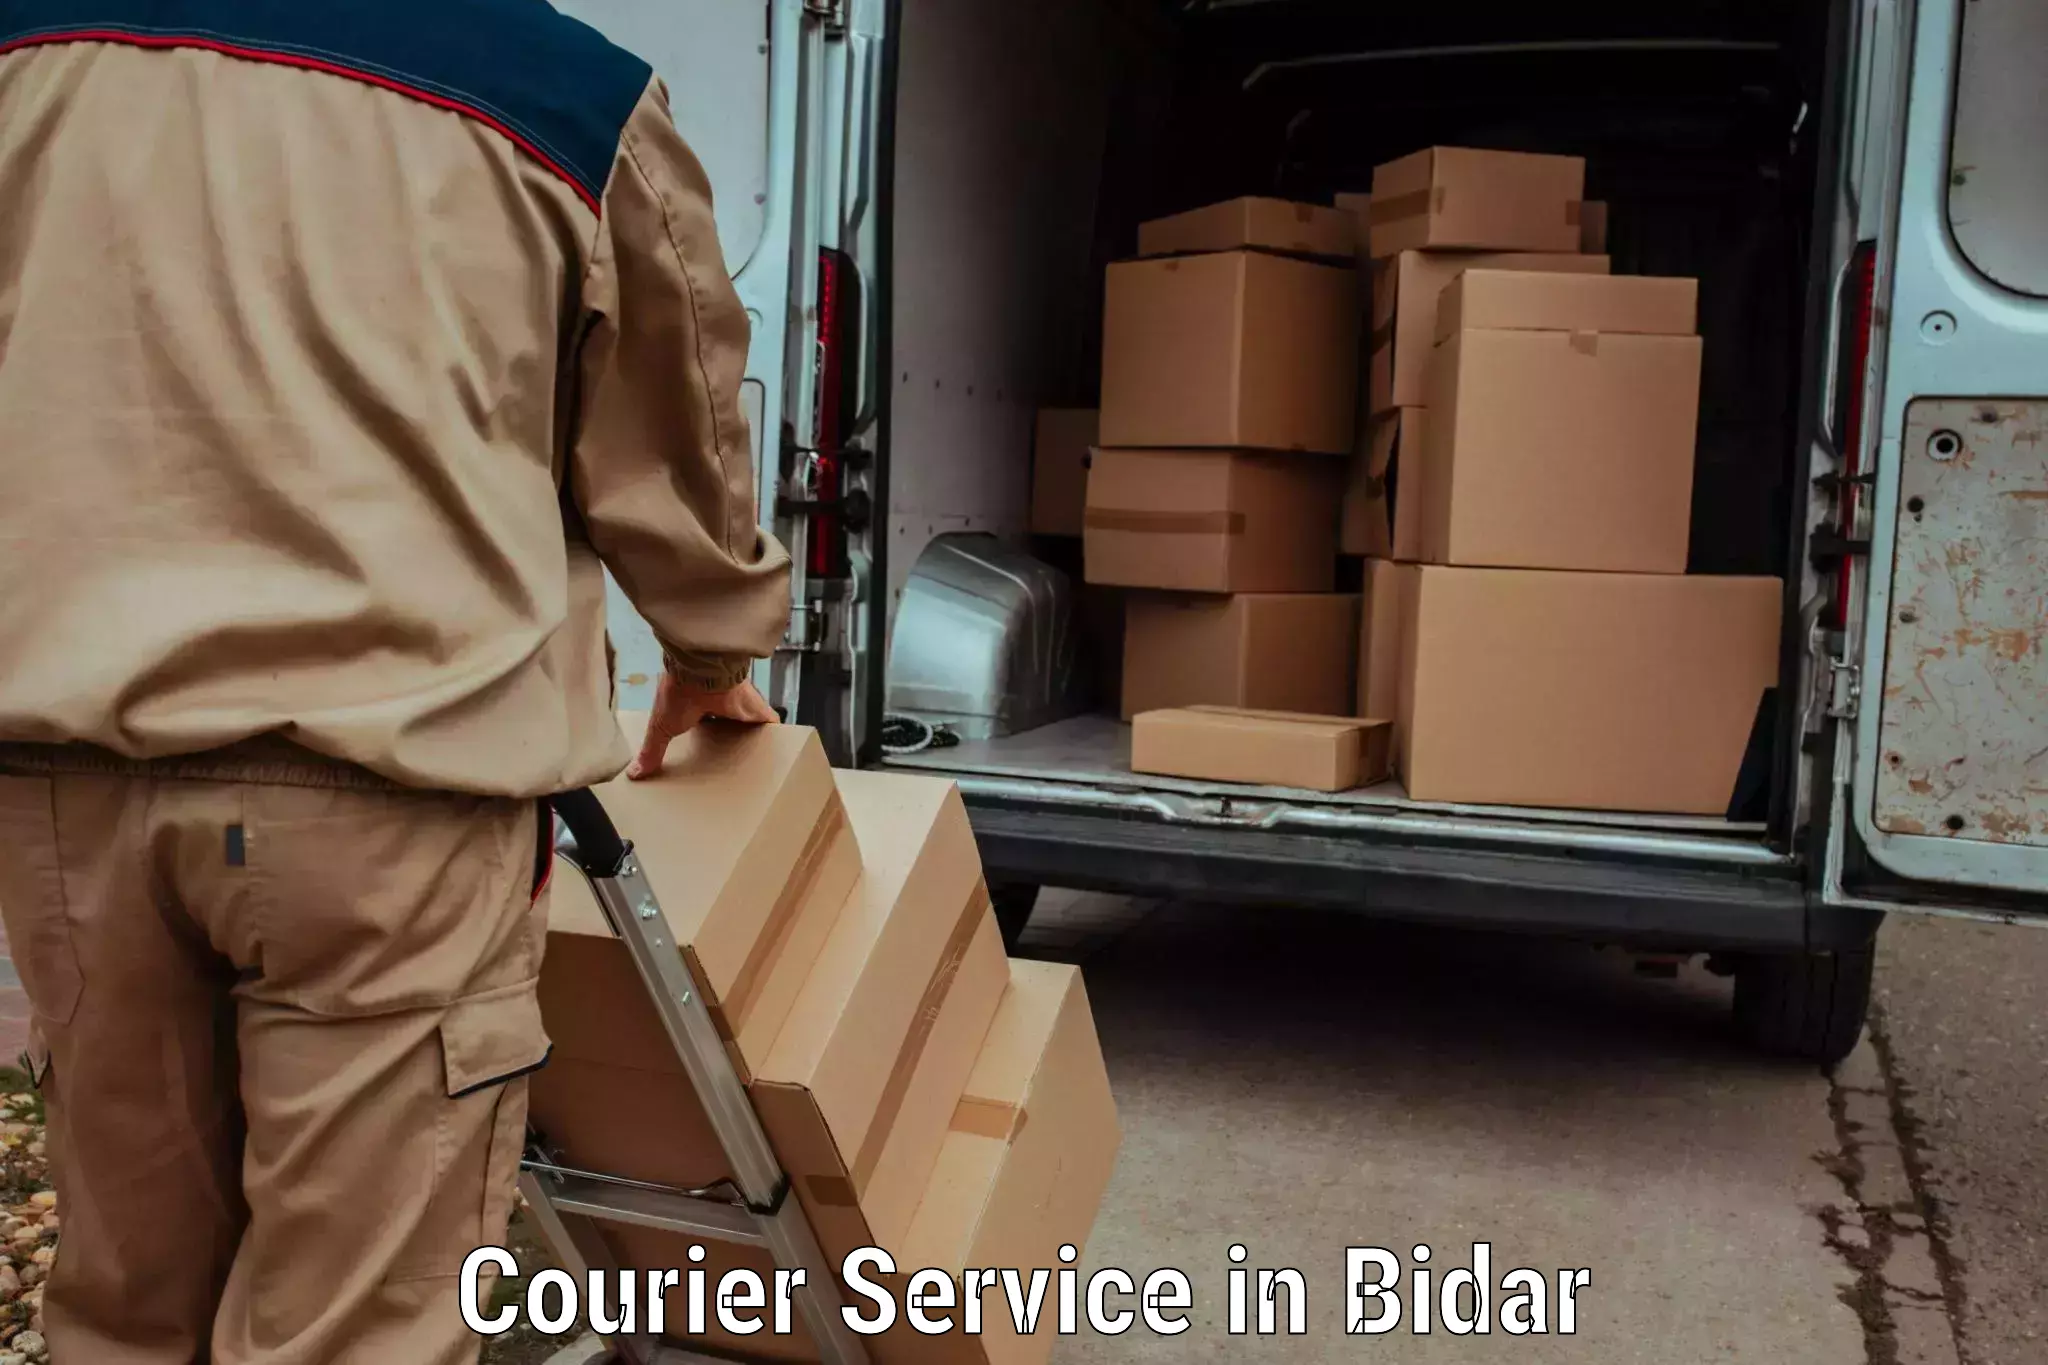 Nationwide delivery network in Bidar